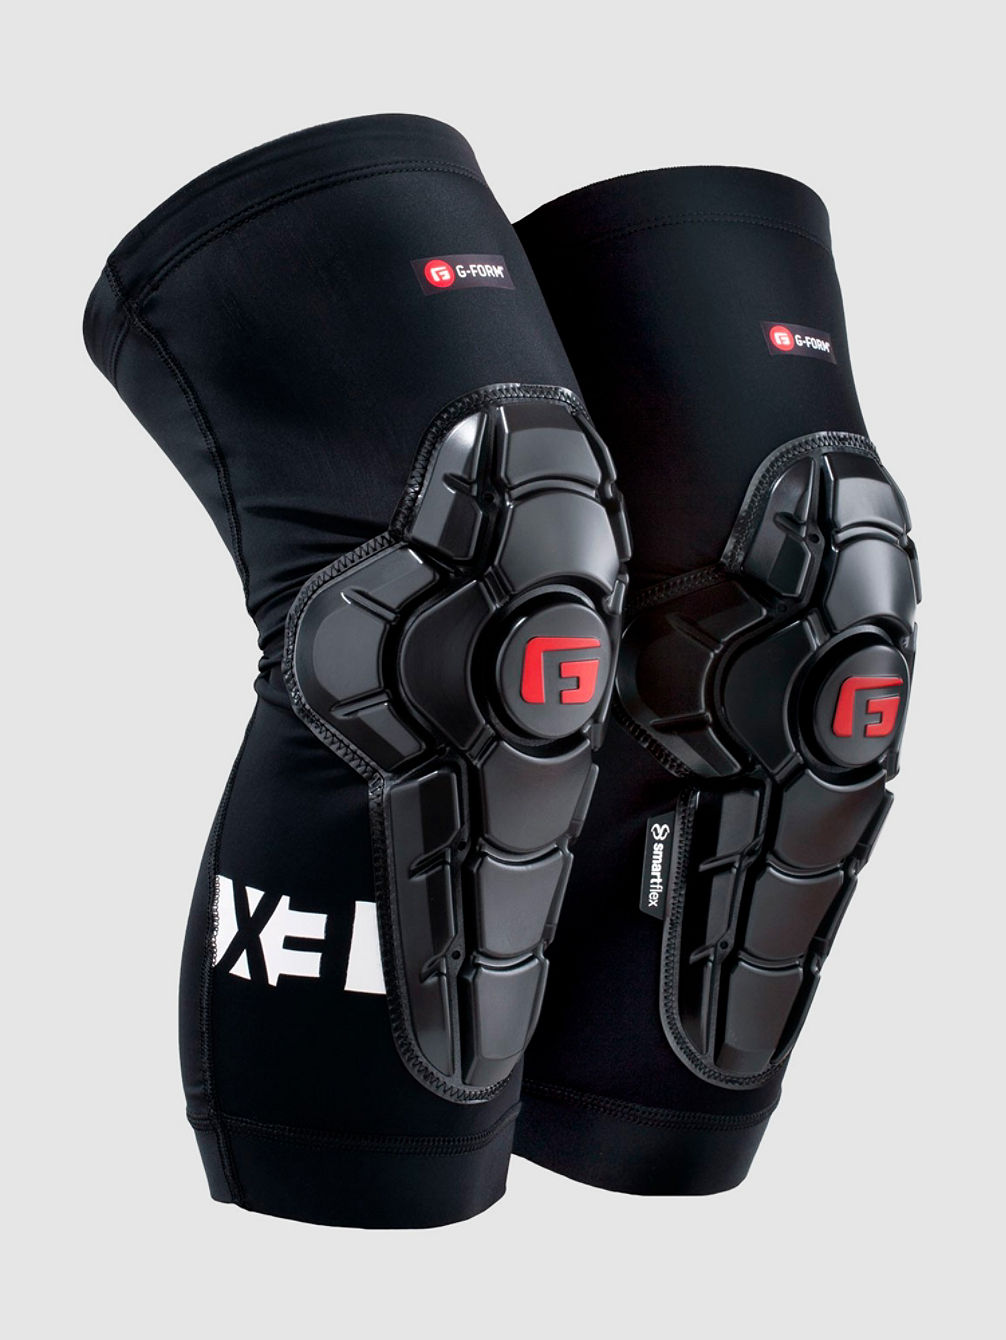 Pro-X3 Guard Knieprotektoren